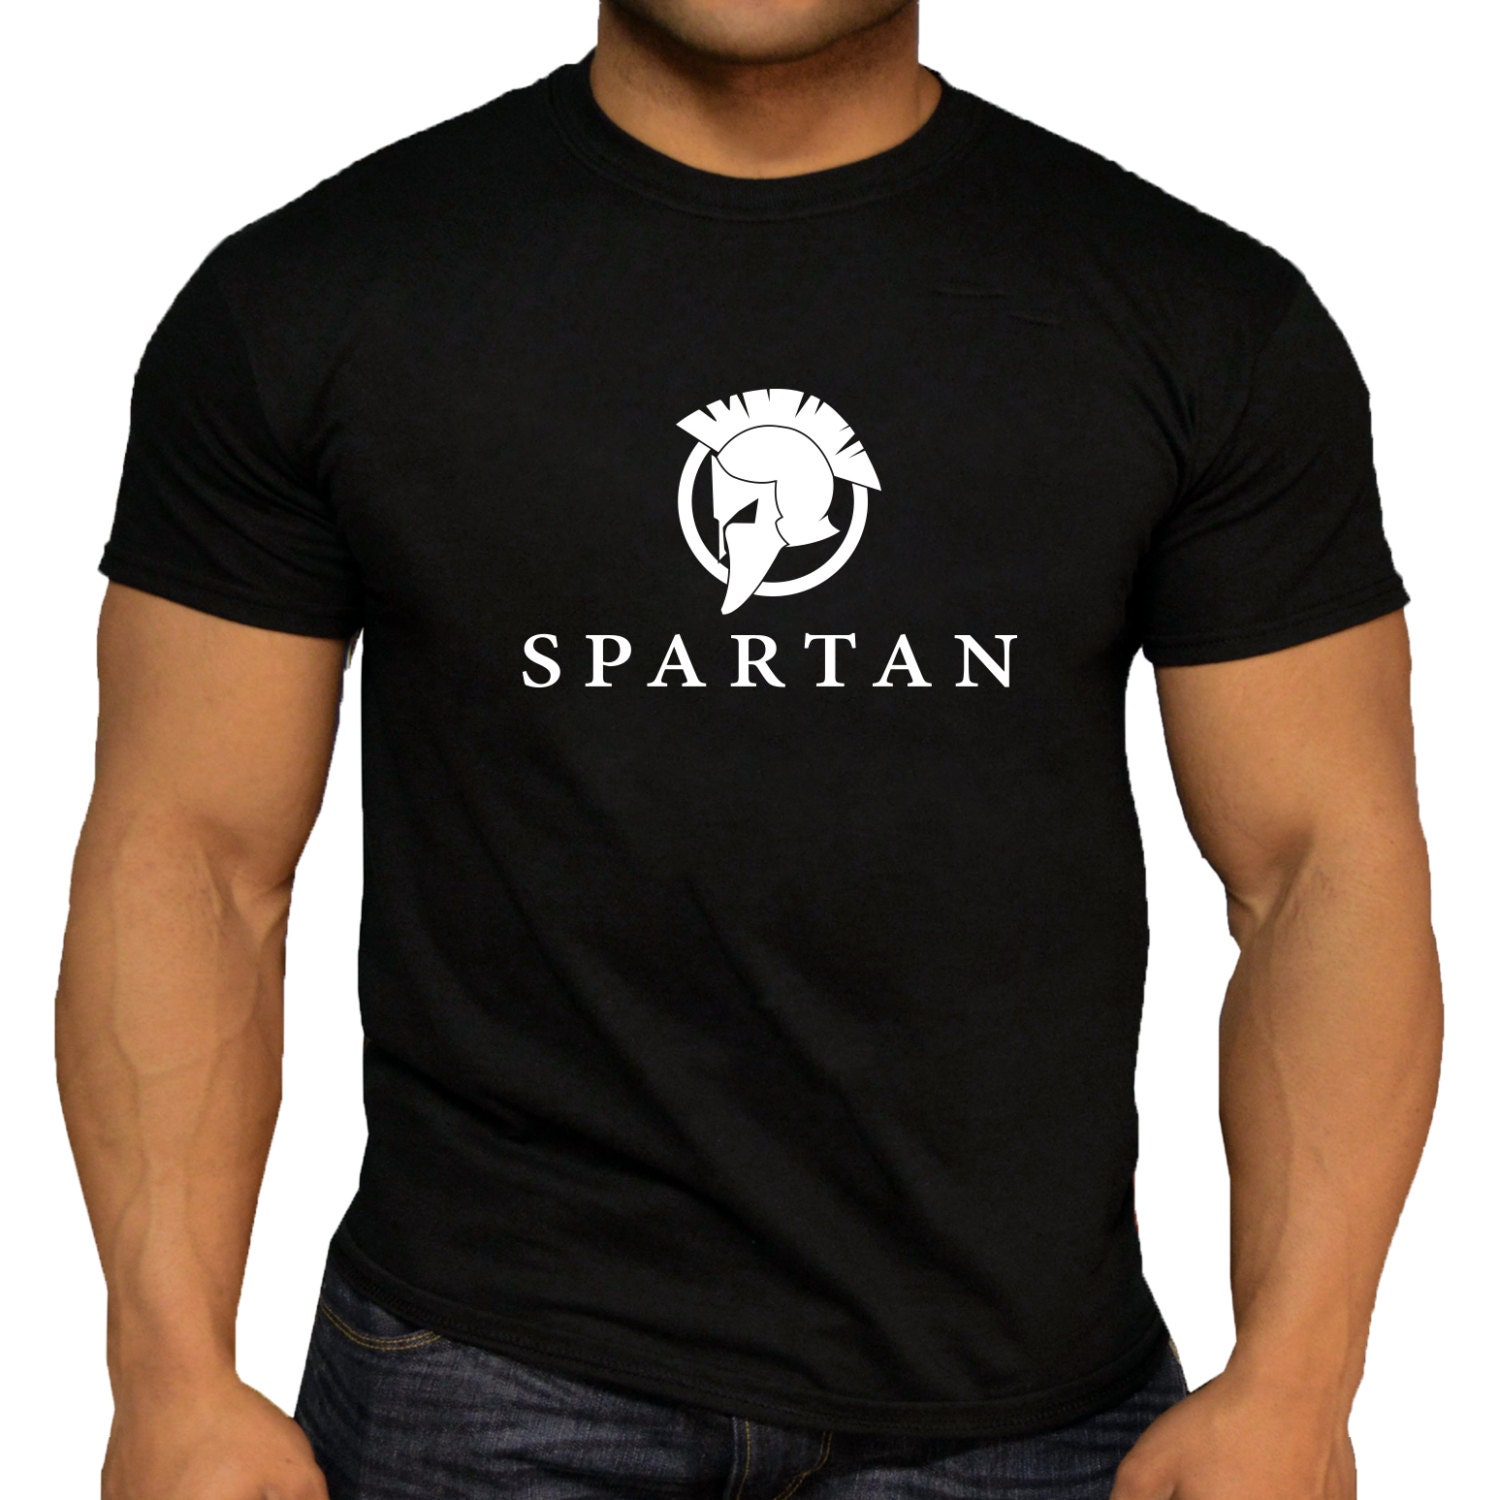 Quality Men's Spartan Classic Training Workout T-Shirt.